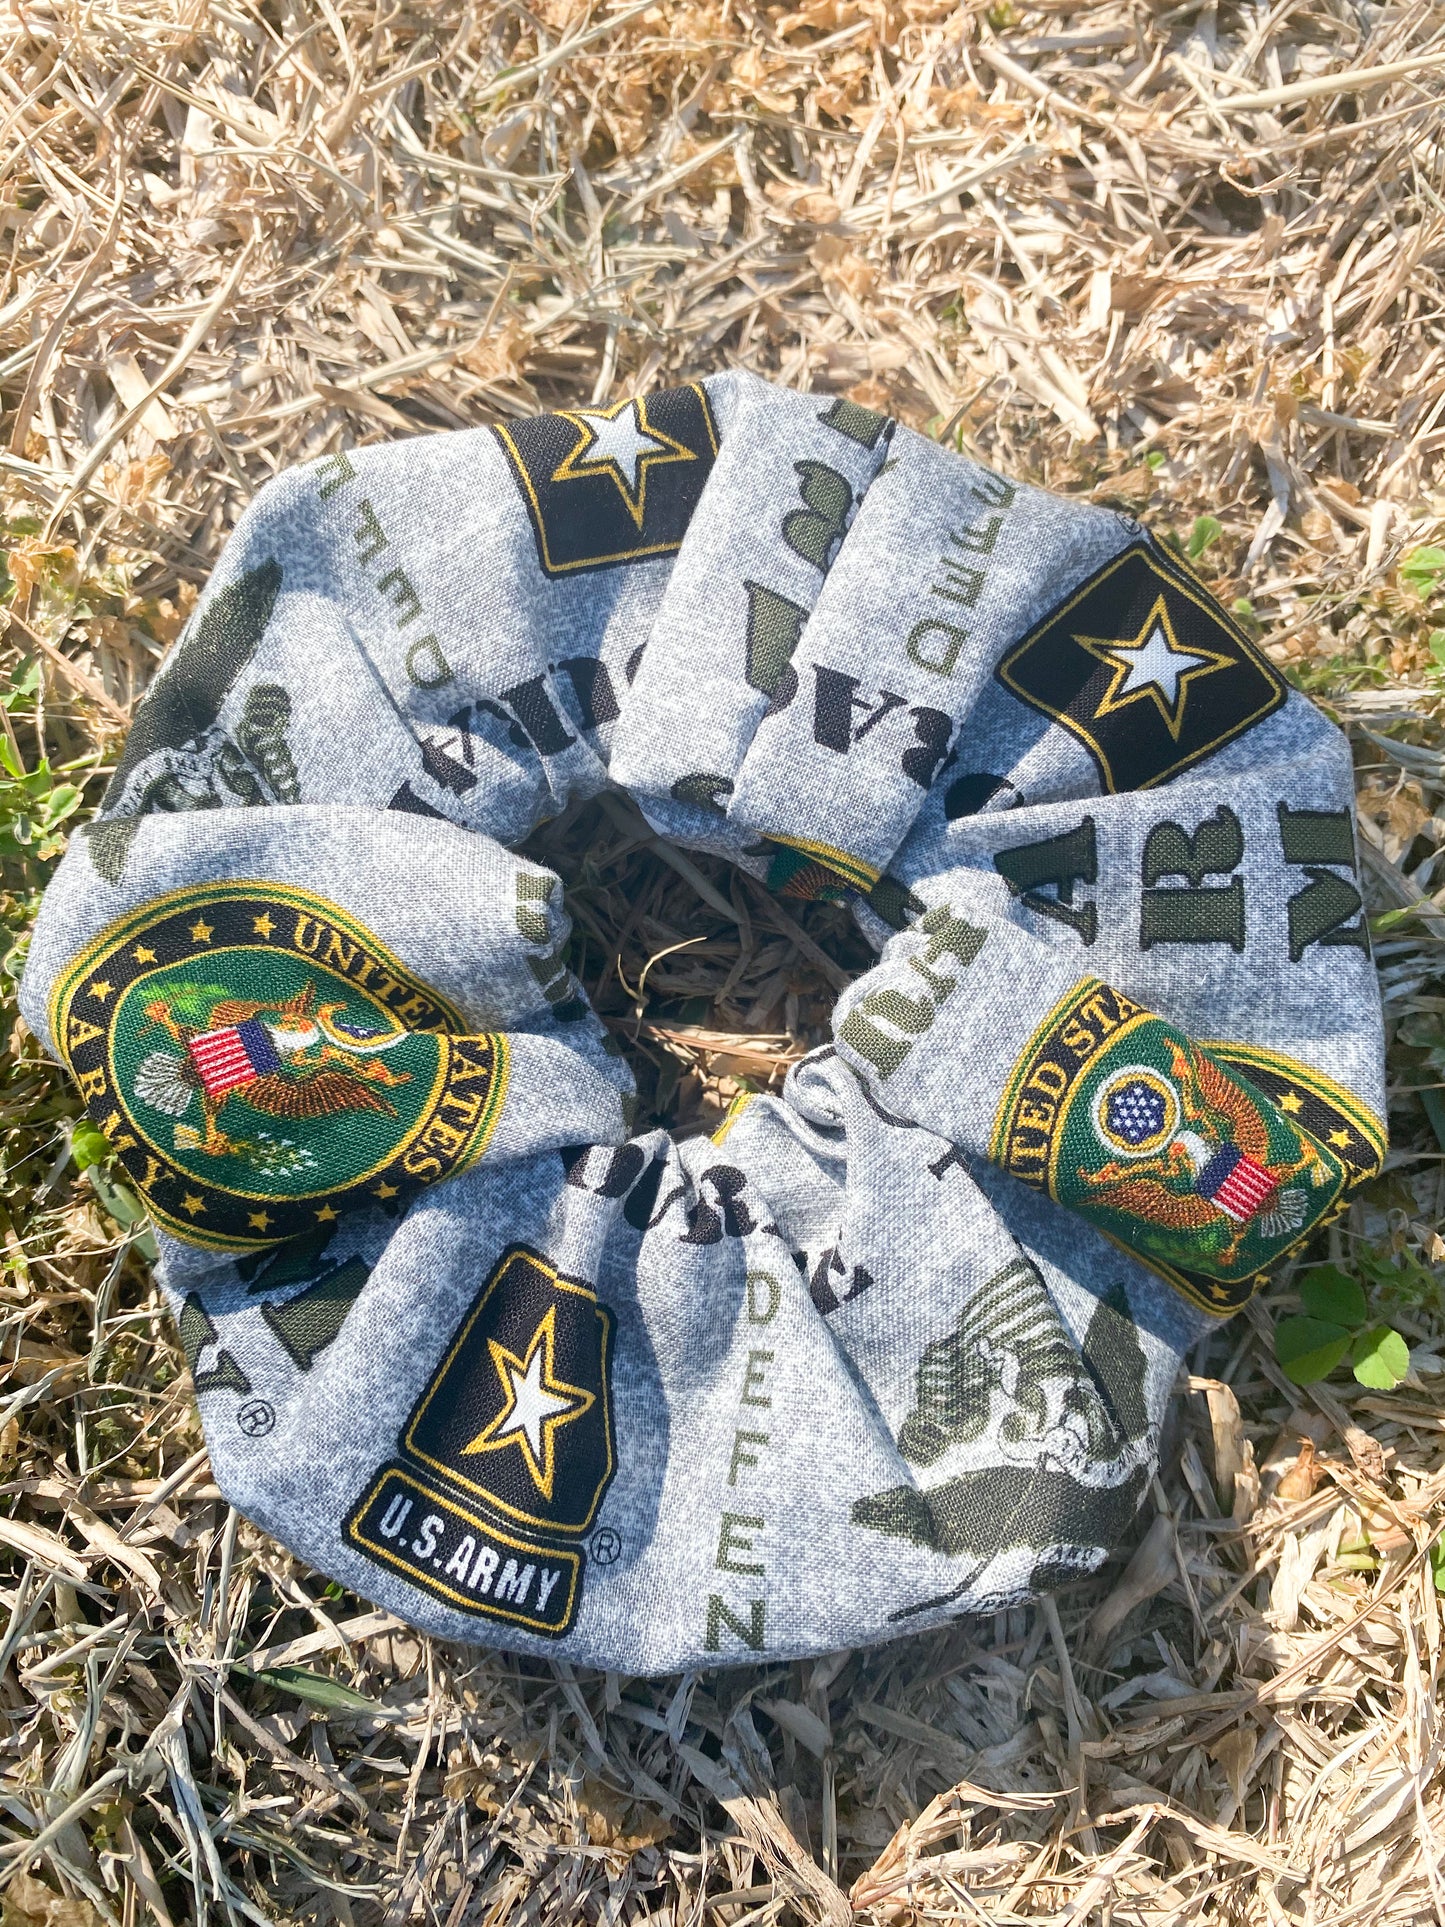 United States Army Scrunchie U.S. Army Hair Tie